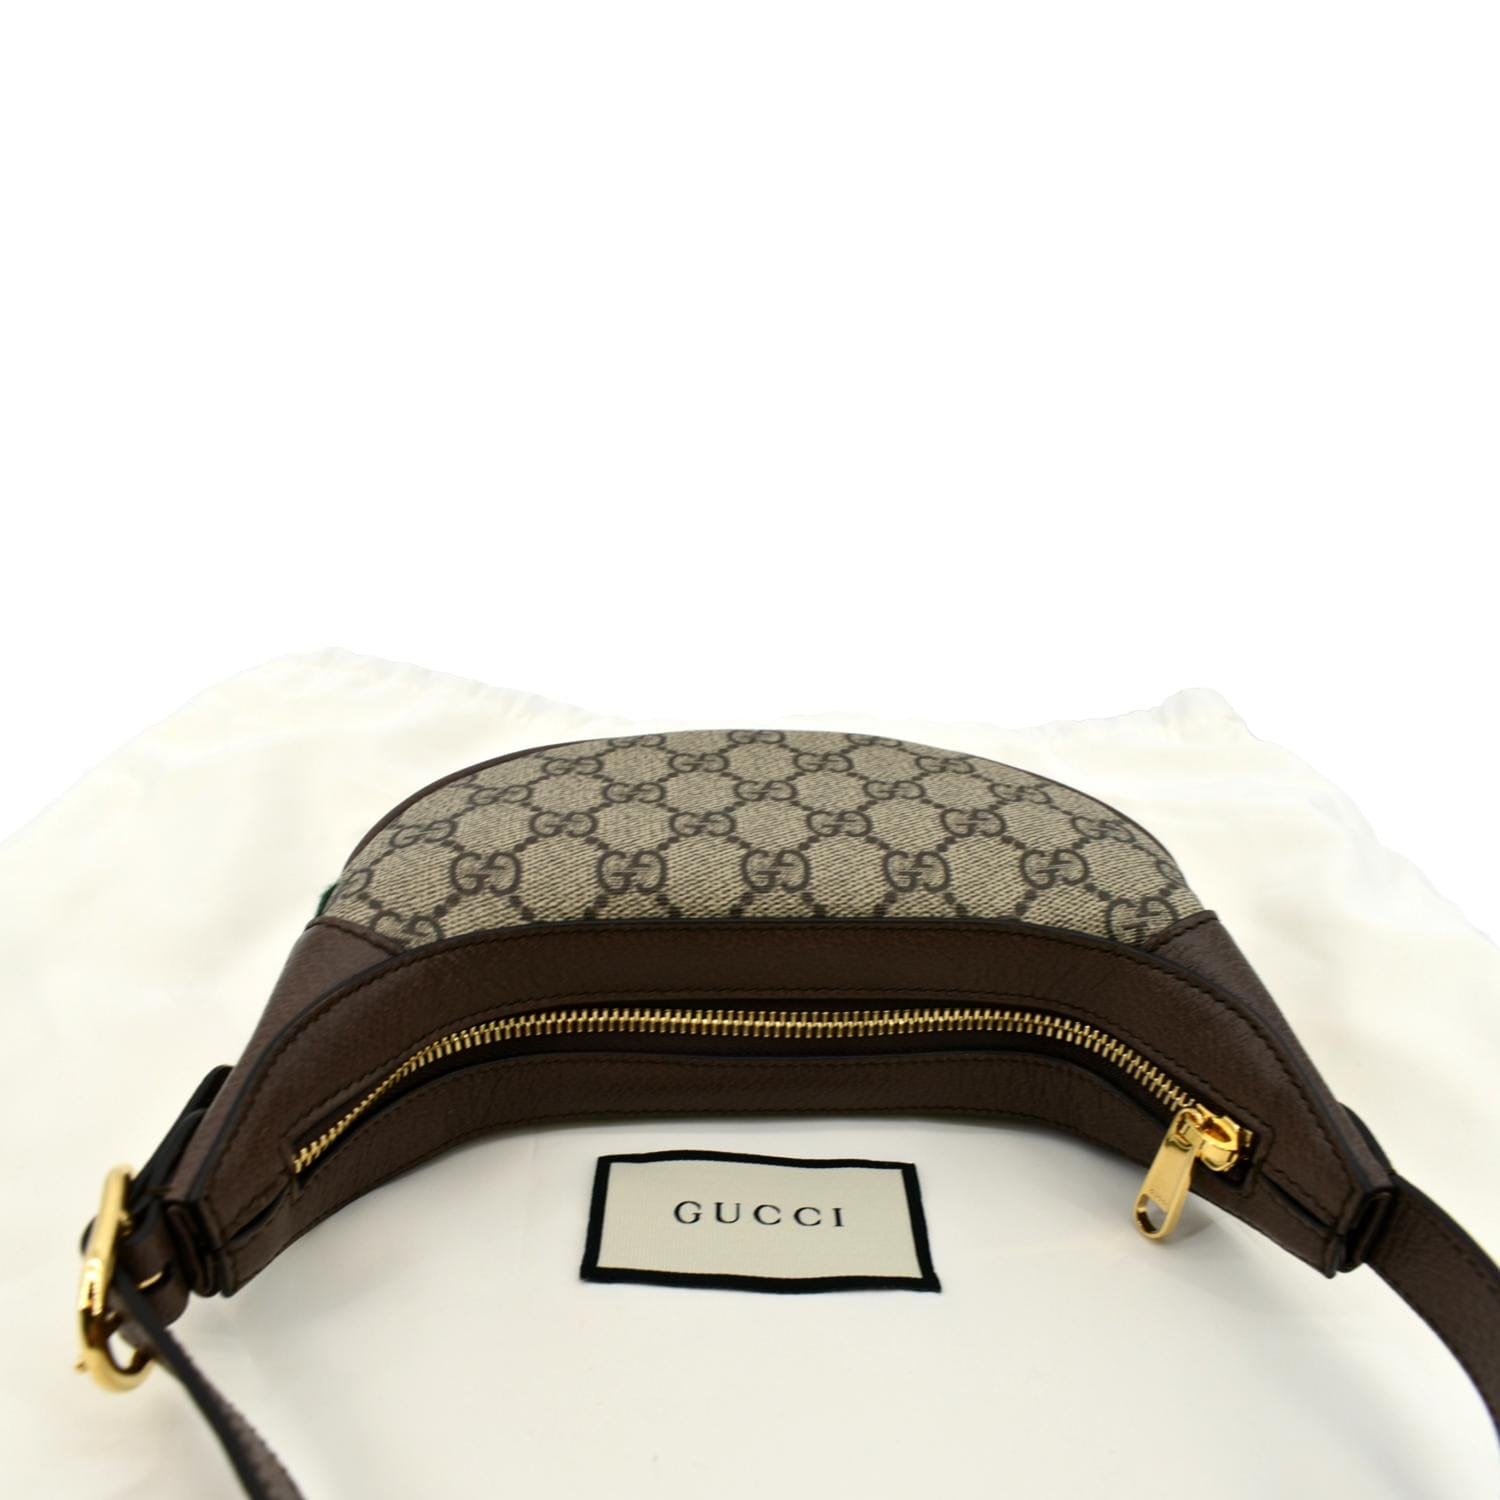 Gucci Ophidia GG Shoulder Bag GG Supreme Canvas Beige/Ebony/Green